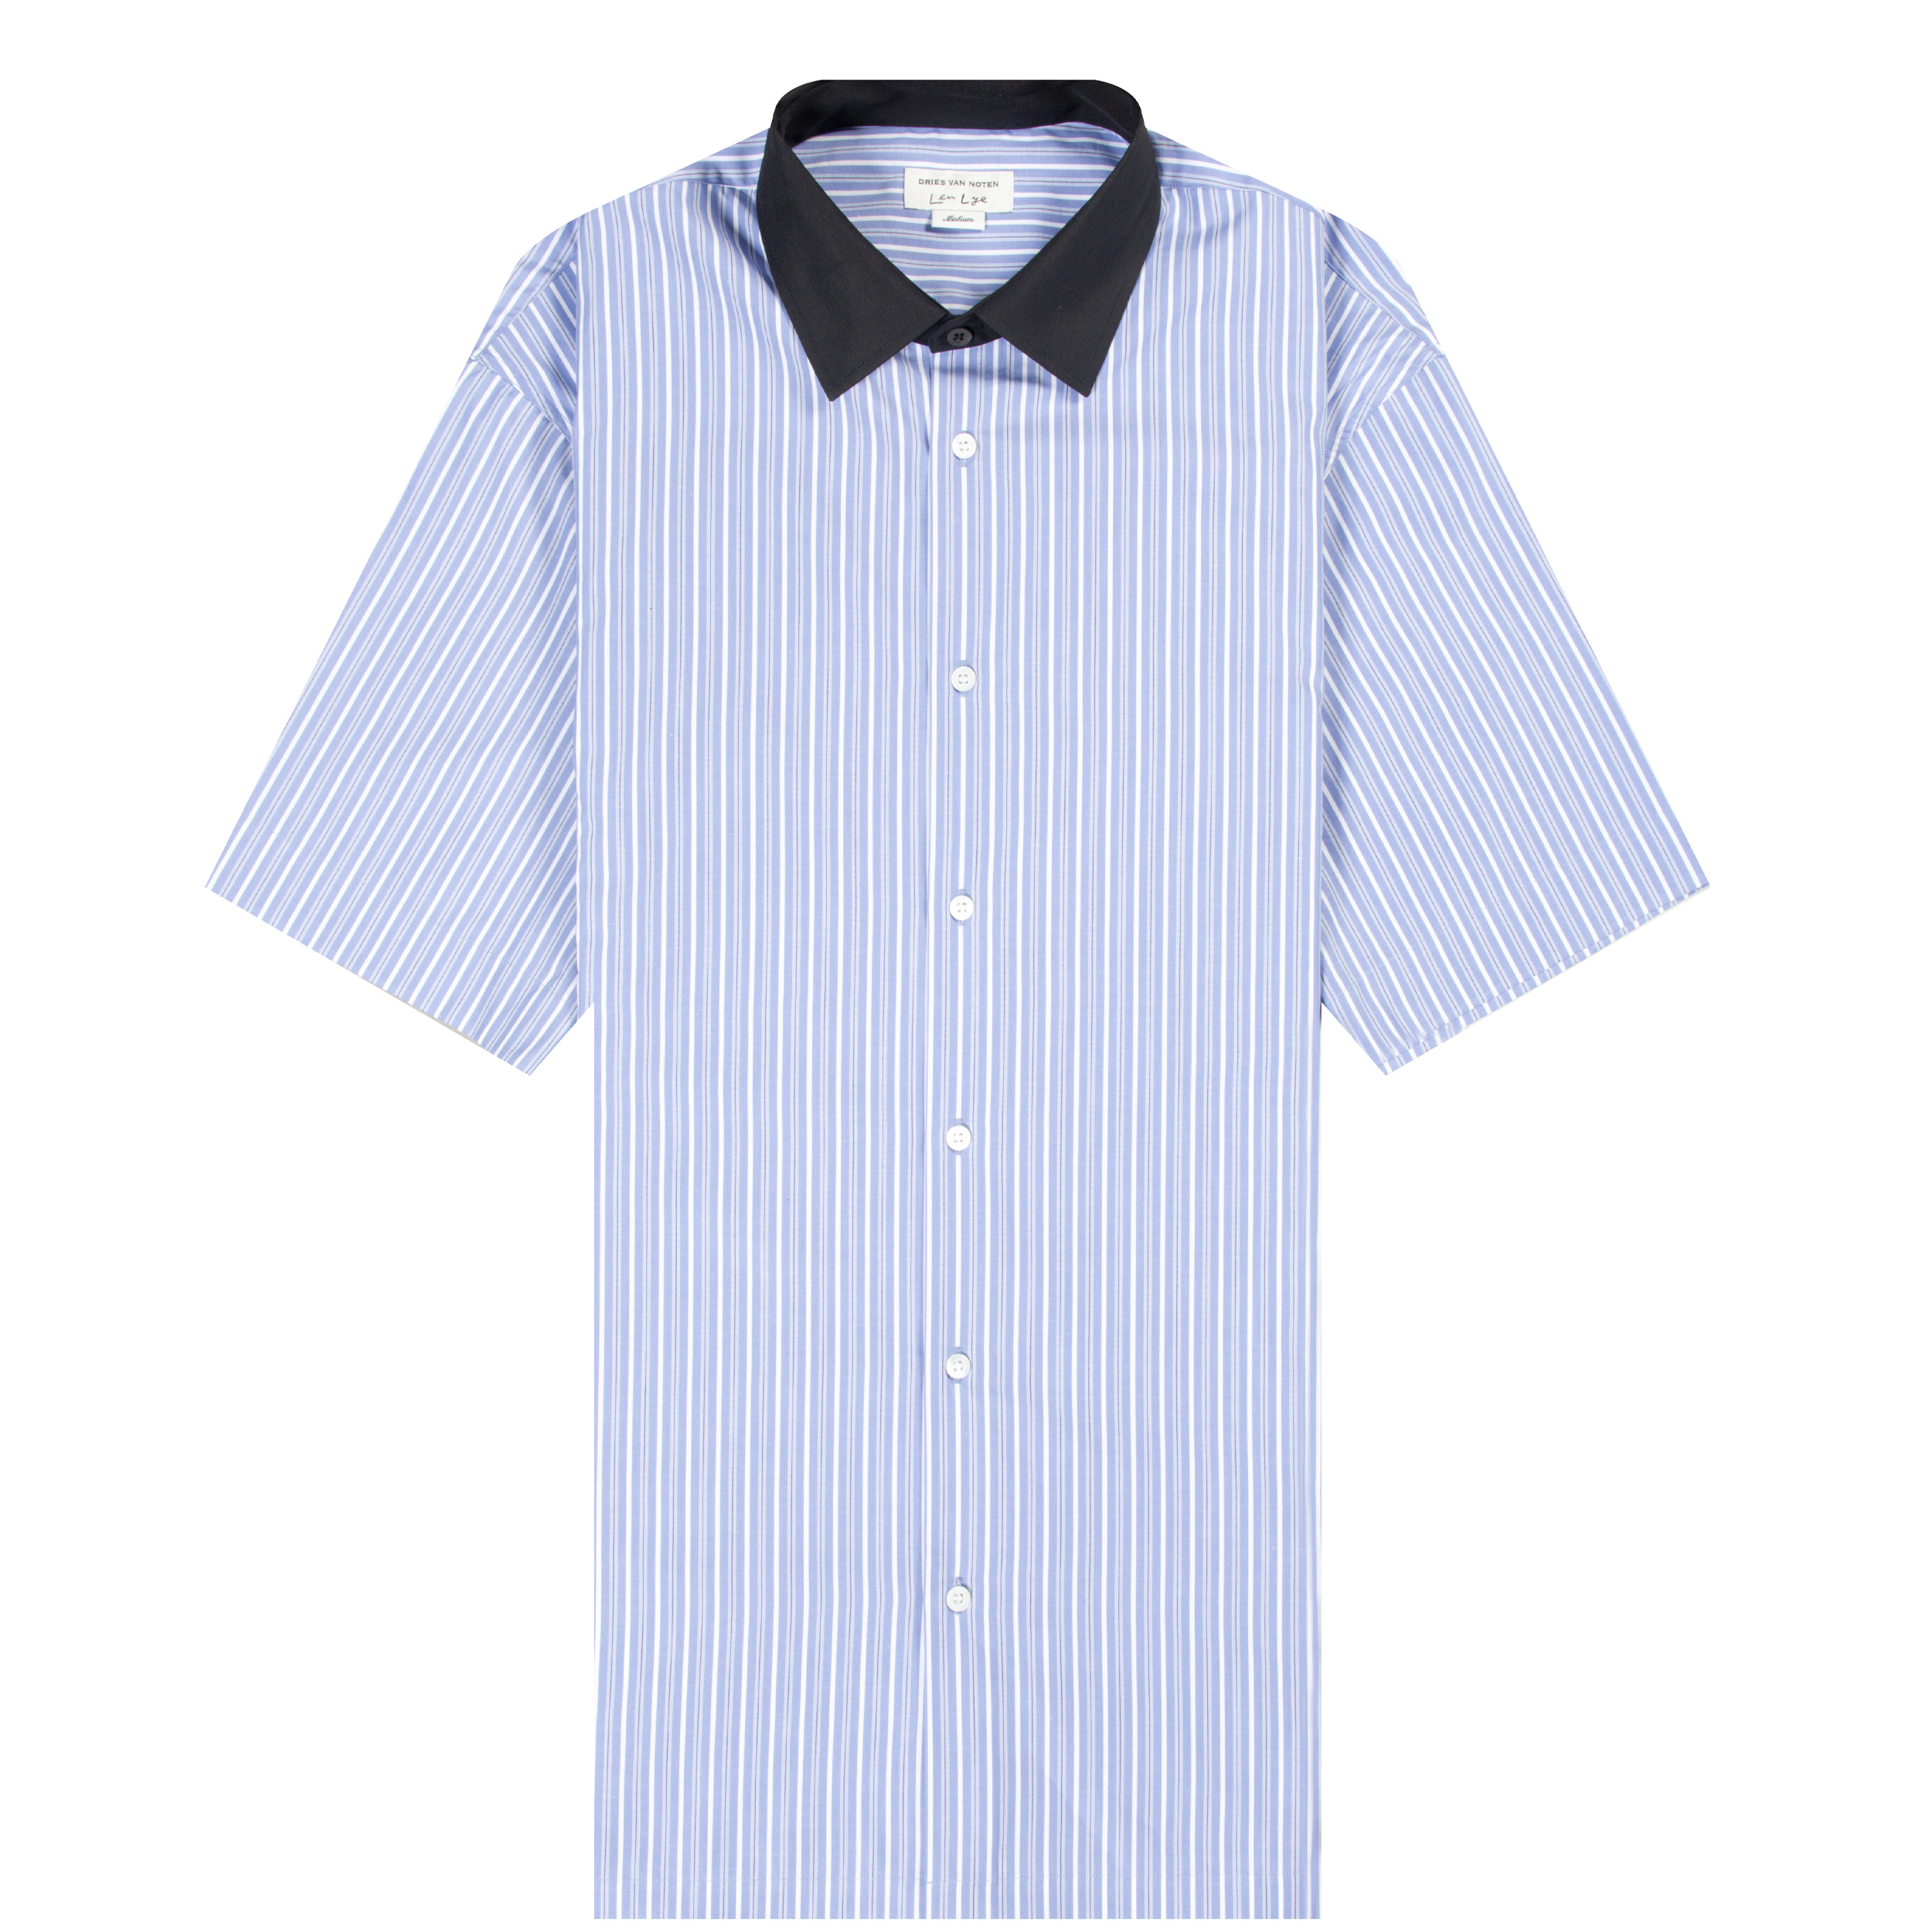 Dries Van Noten ’Cassidy Patch’ Striped Cotton-Poplin Shirt Blue/White